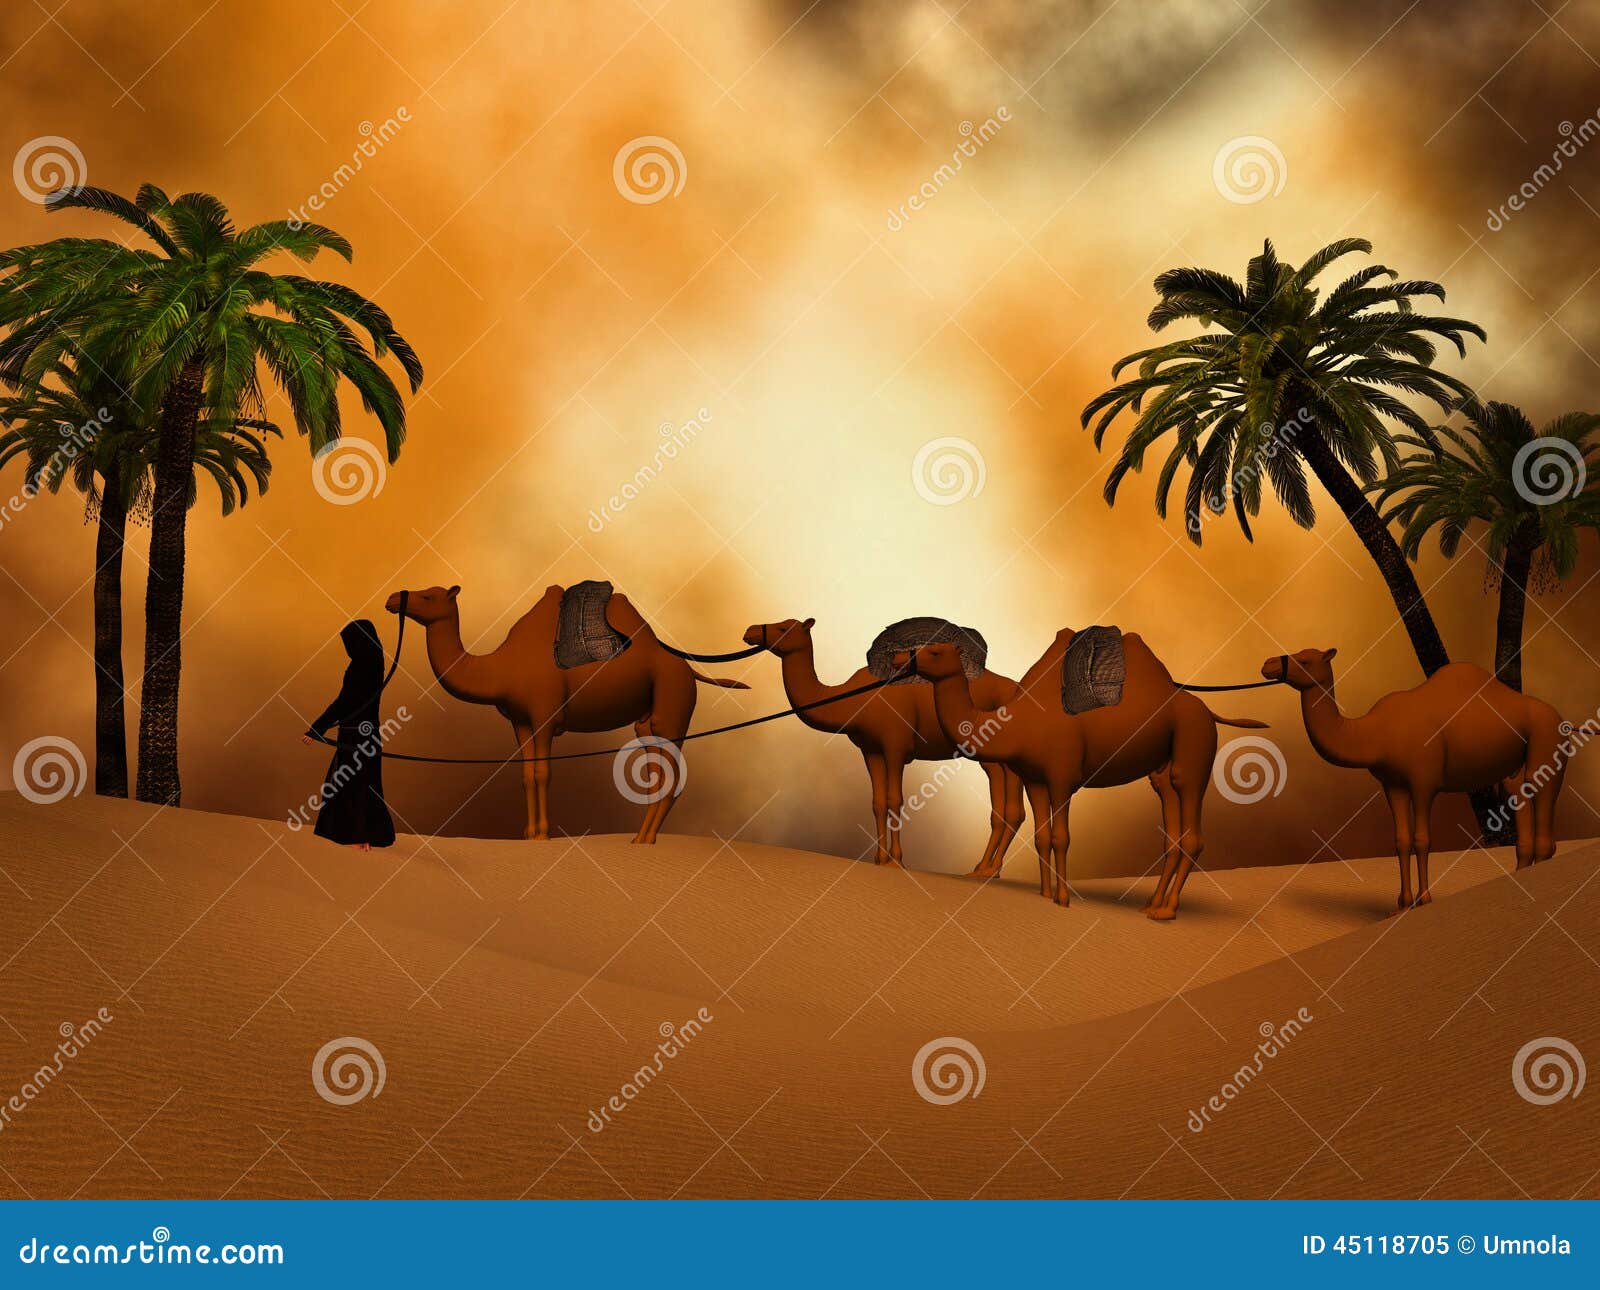 Караван остановился. Оазис в пустыне Верблюды. Верблюд в оазисе. Верблюд и Пальма. Караван верблюдов в пустыне.